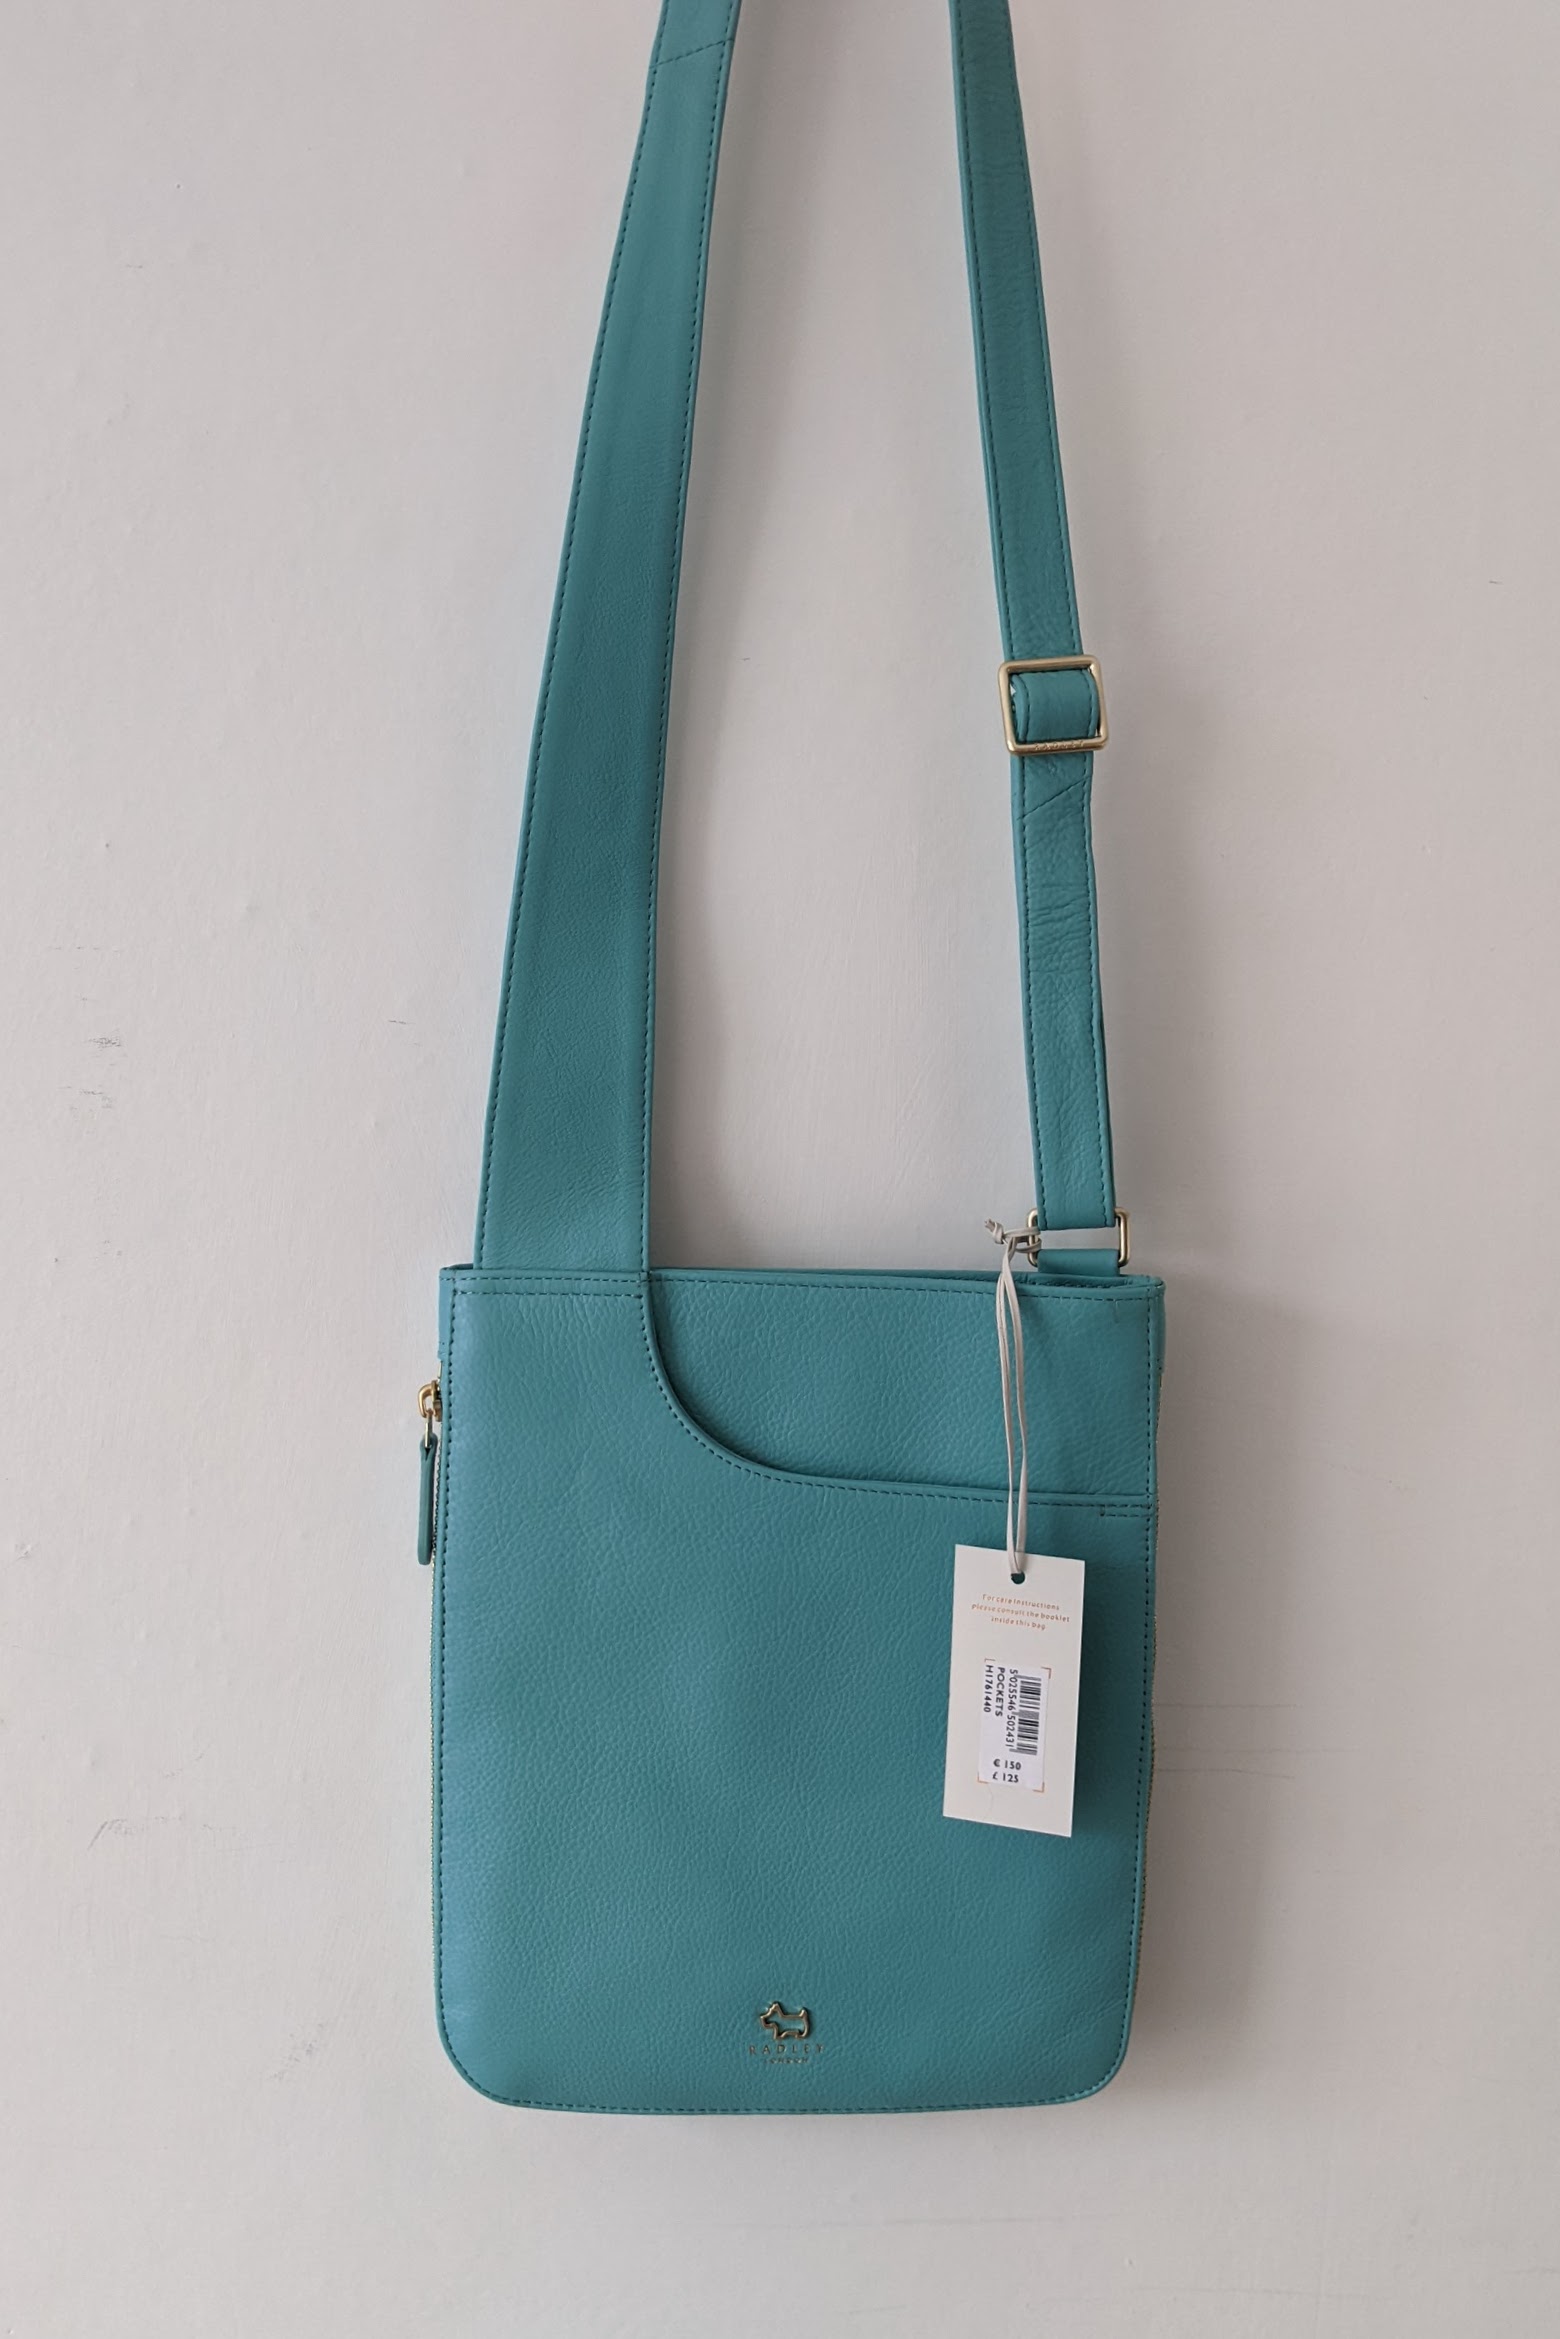 Radley Turquoise Blue Bag (front)